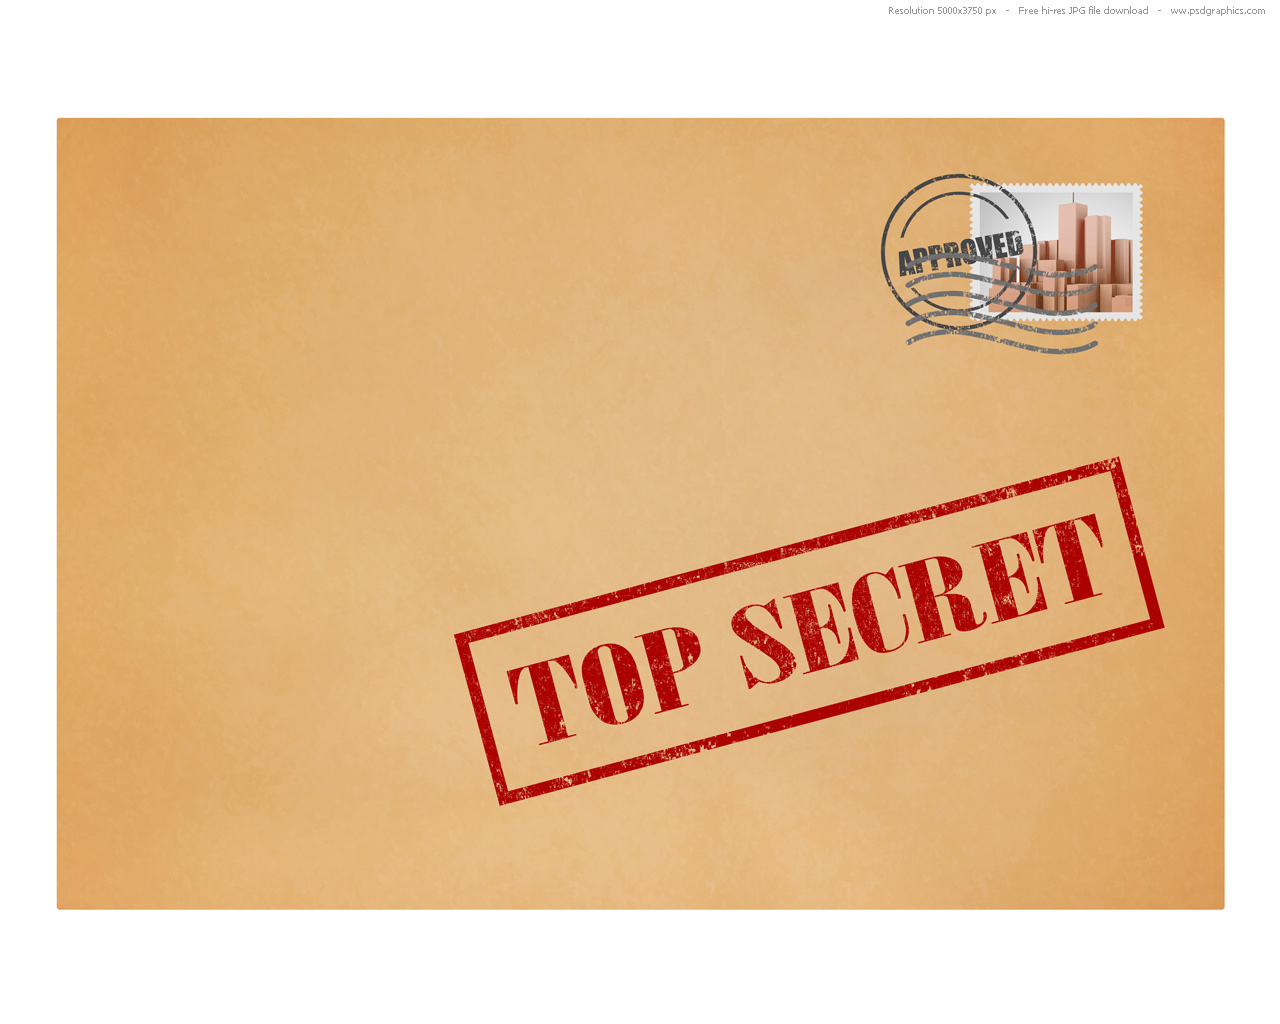 Top secret stamp and envelope PSDGraphics